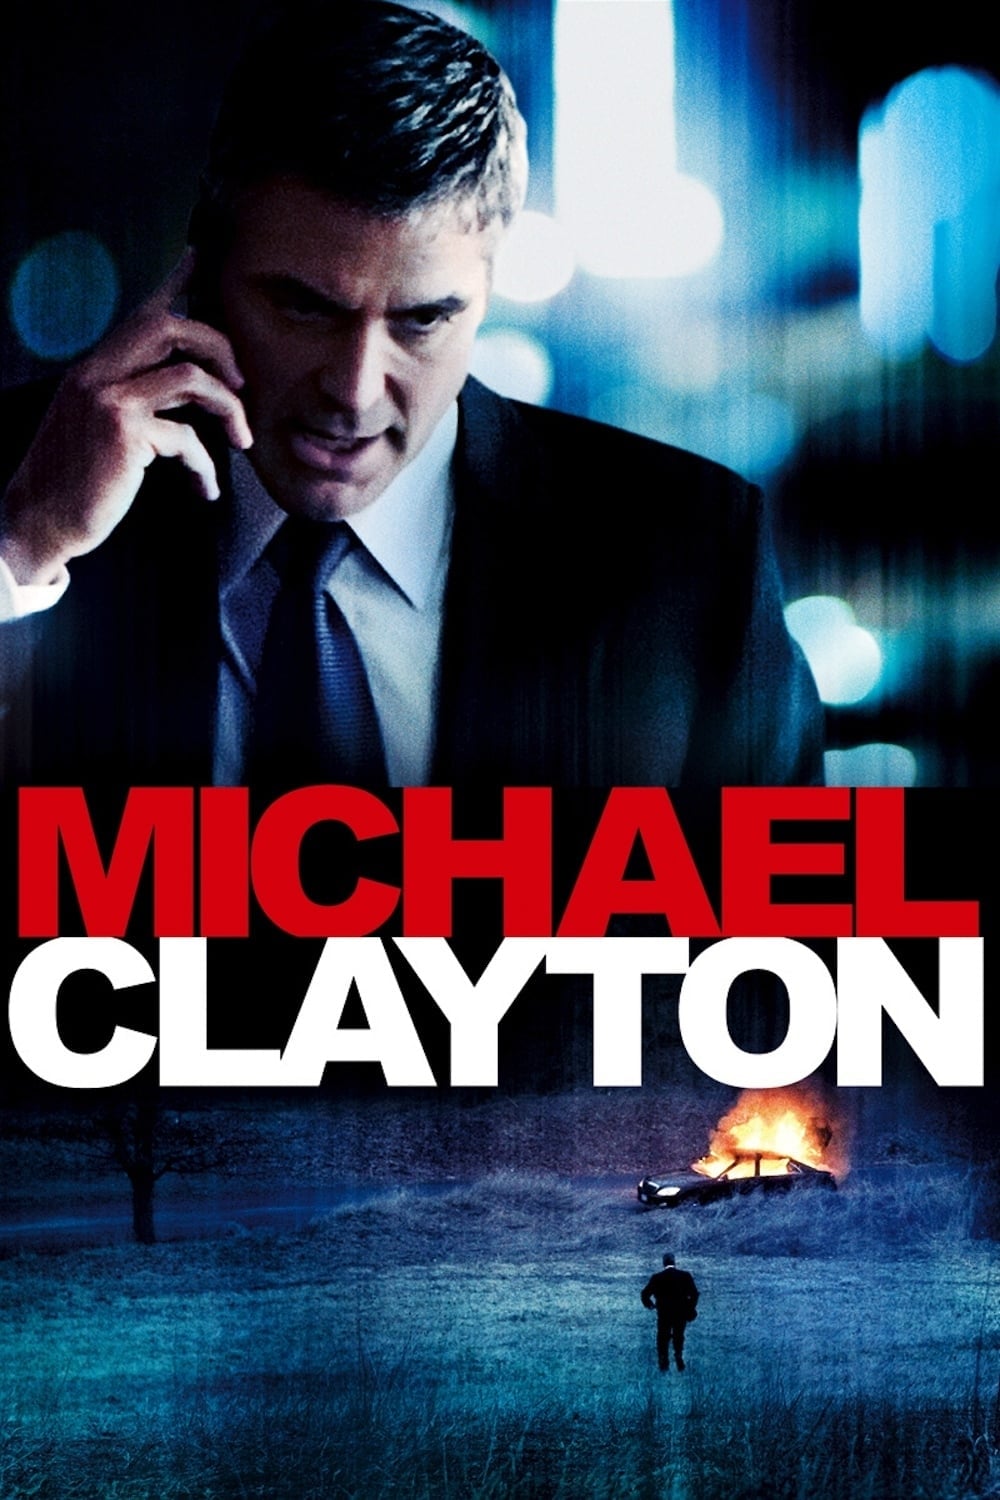 Đấu Trí - Michael Clayton (2007)